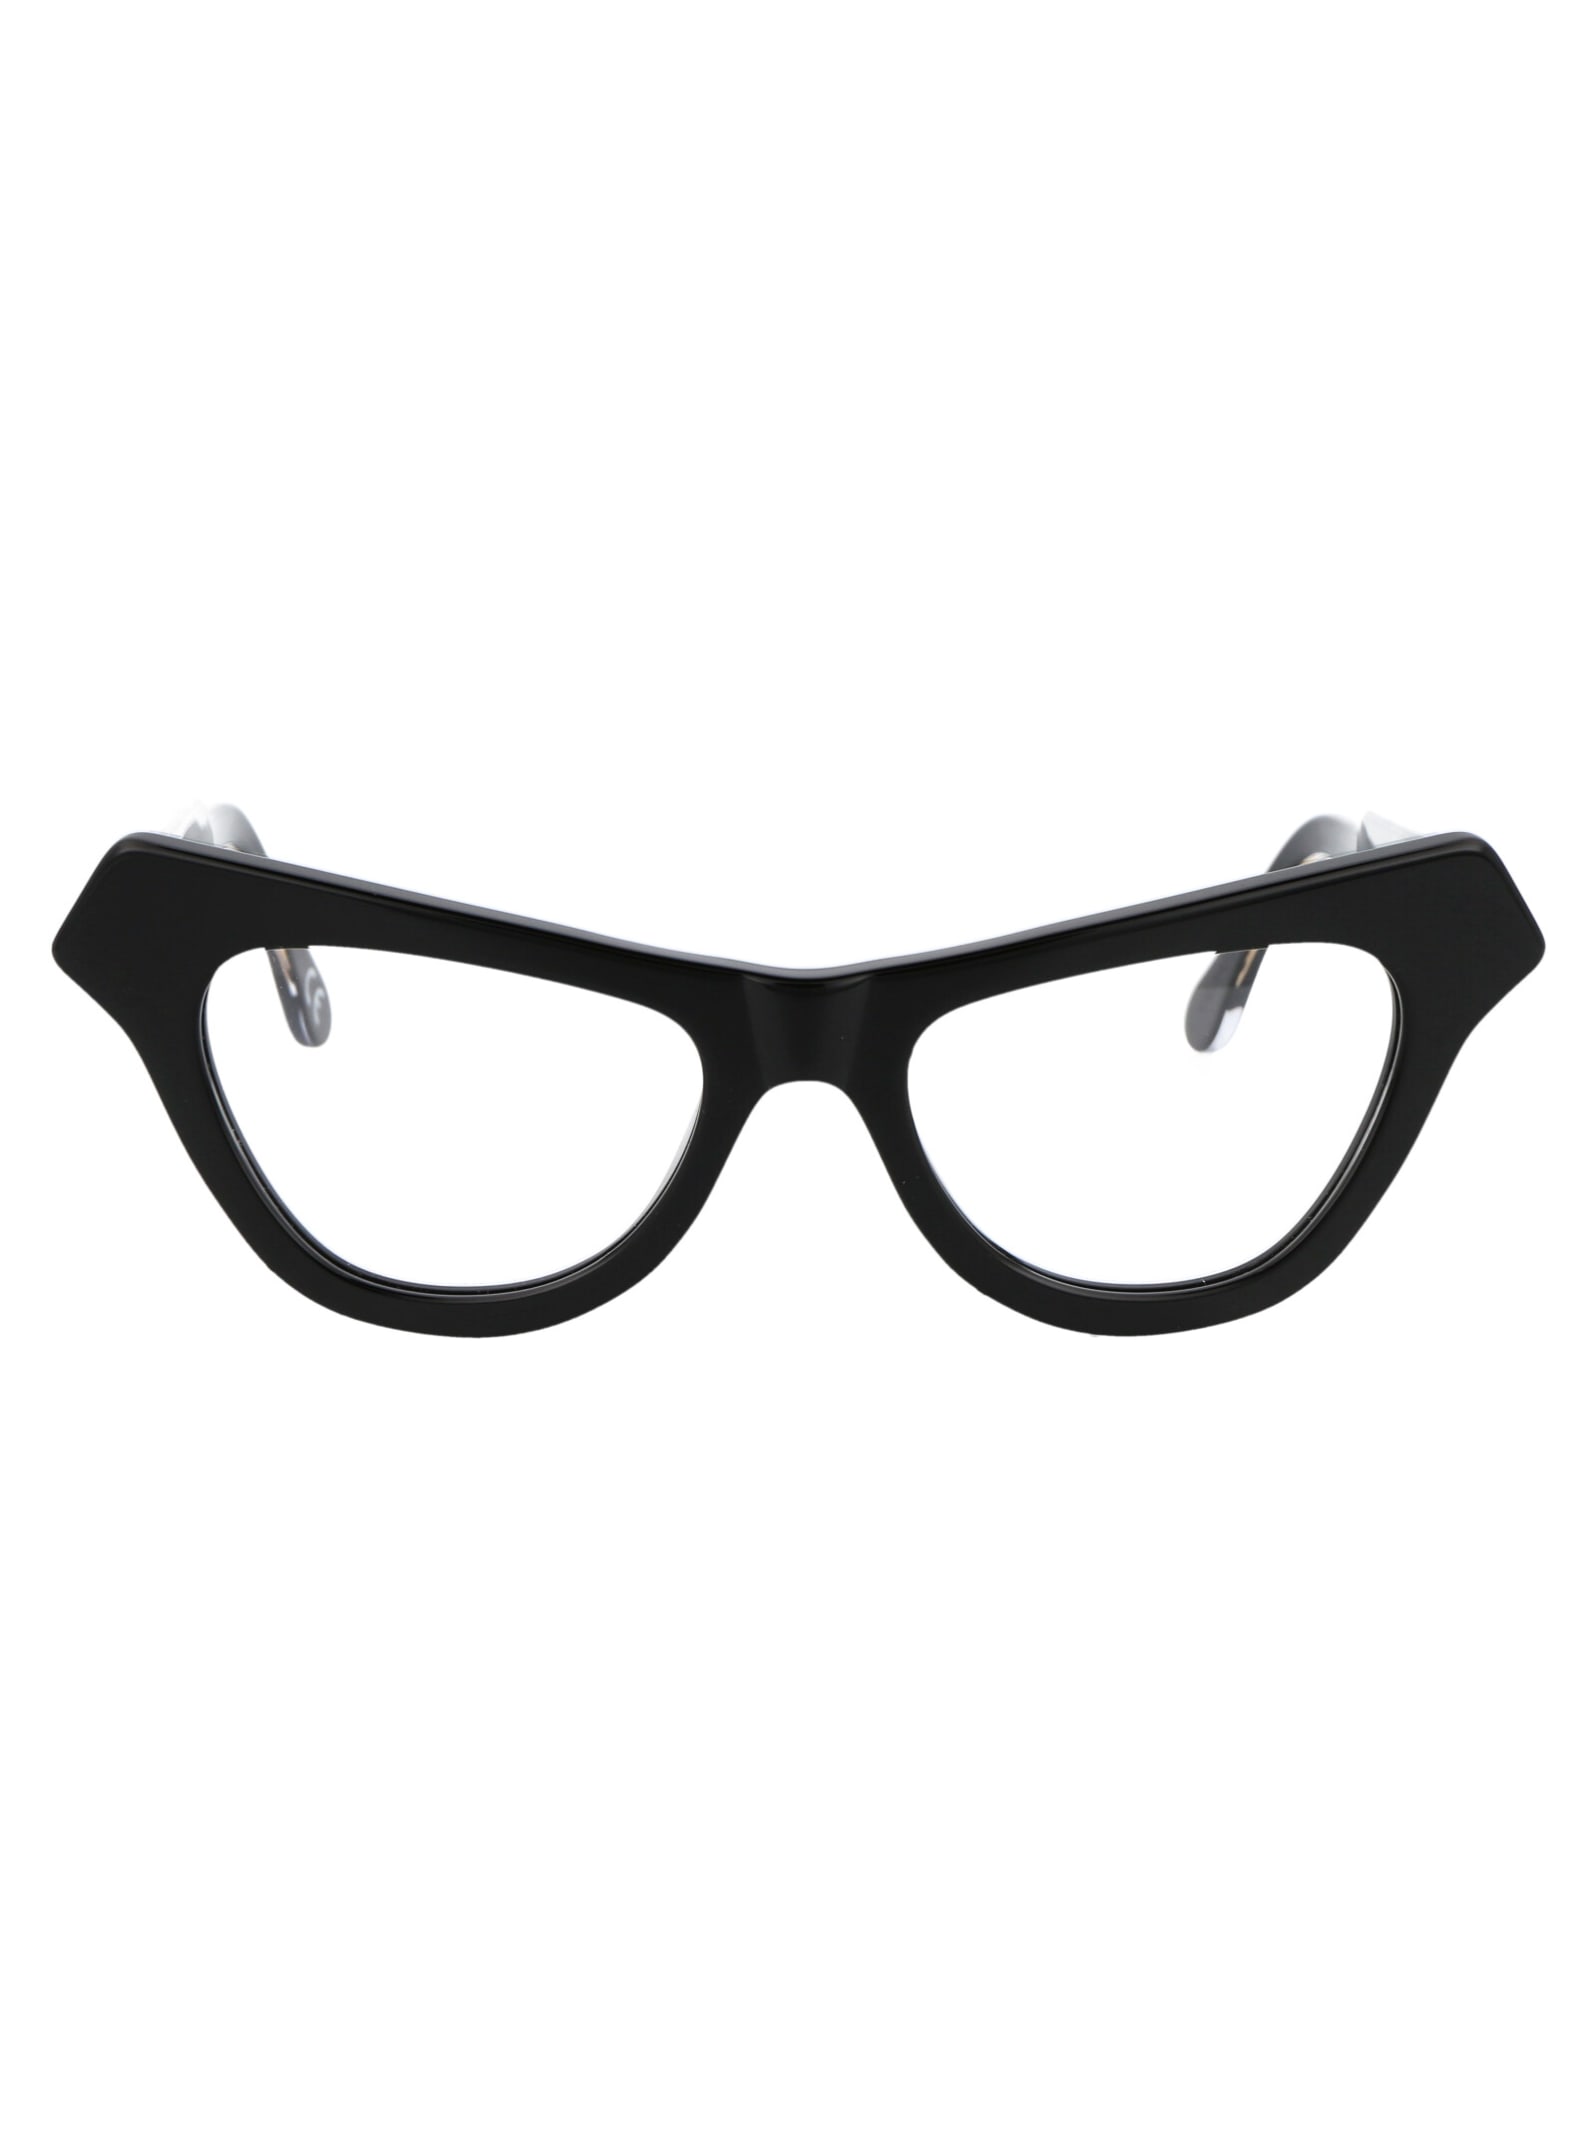 Marni Eyewear Jeju Island Glasses